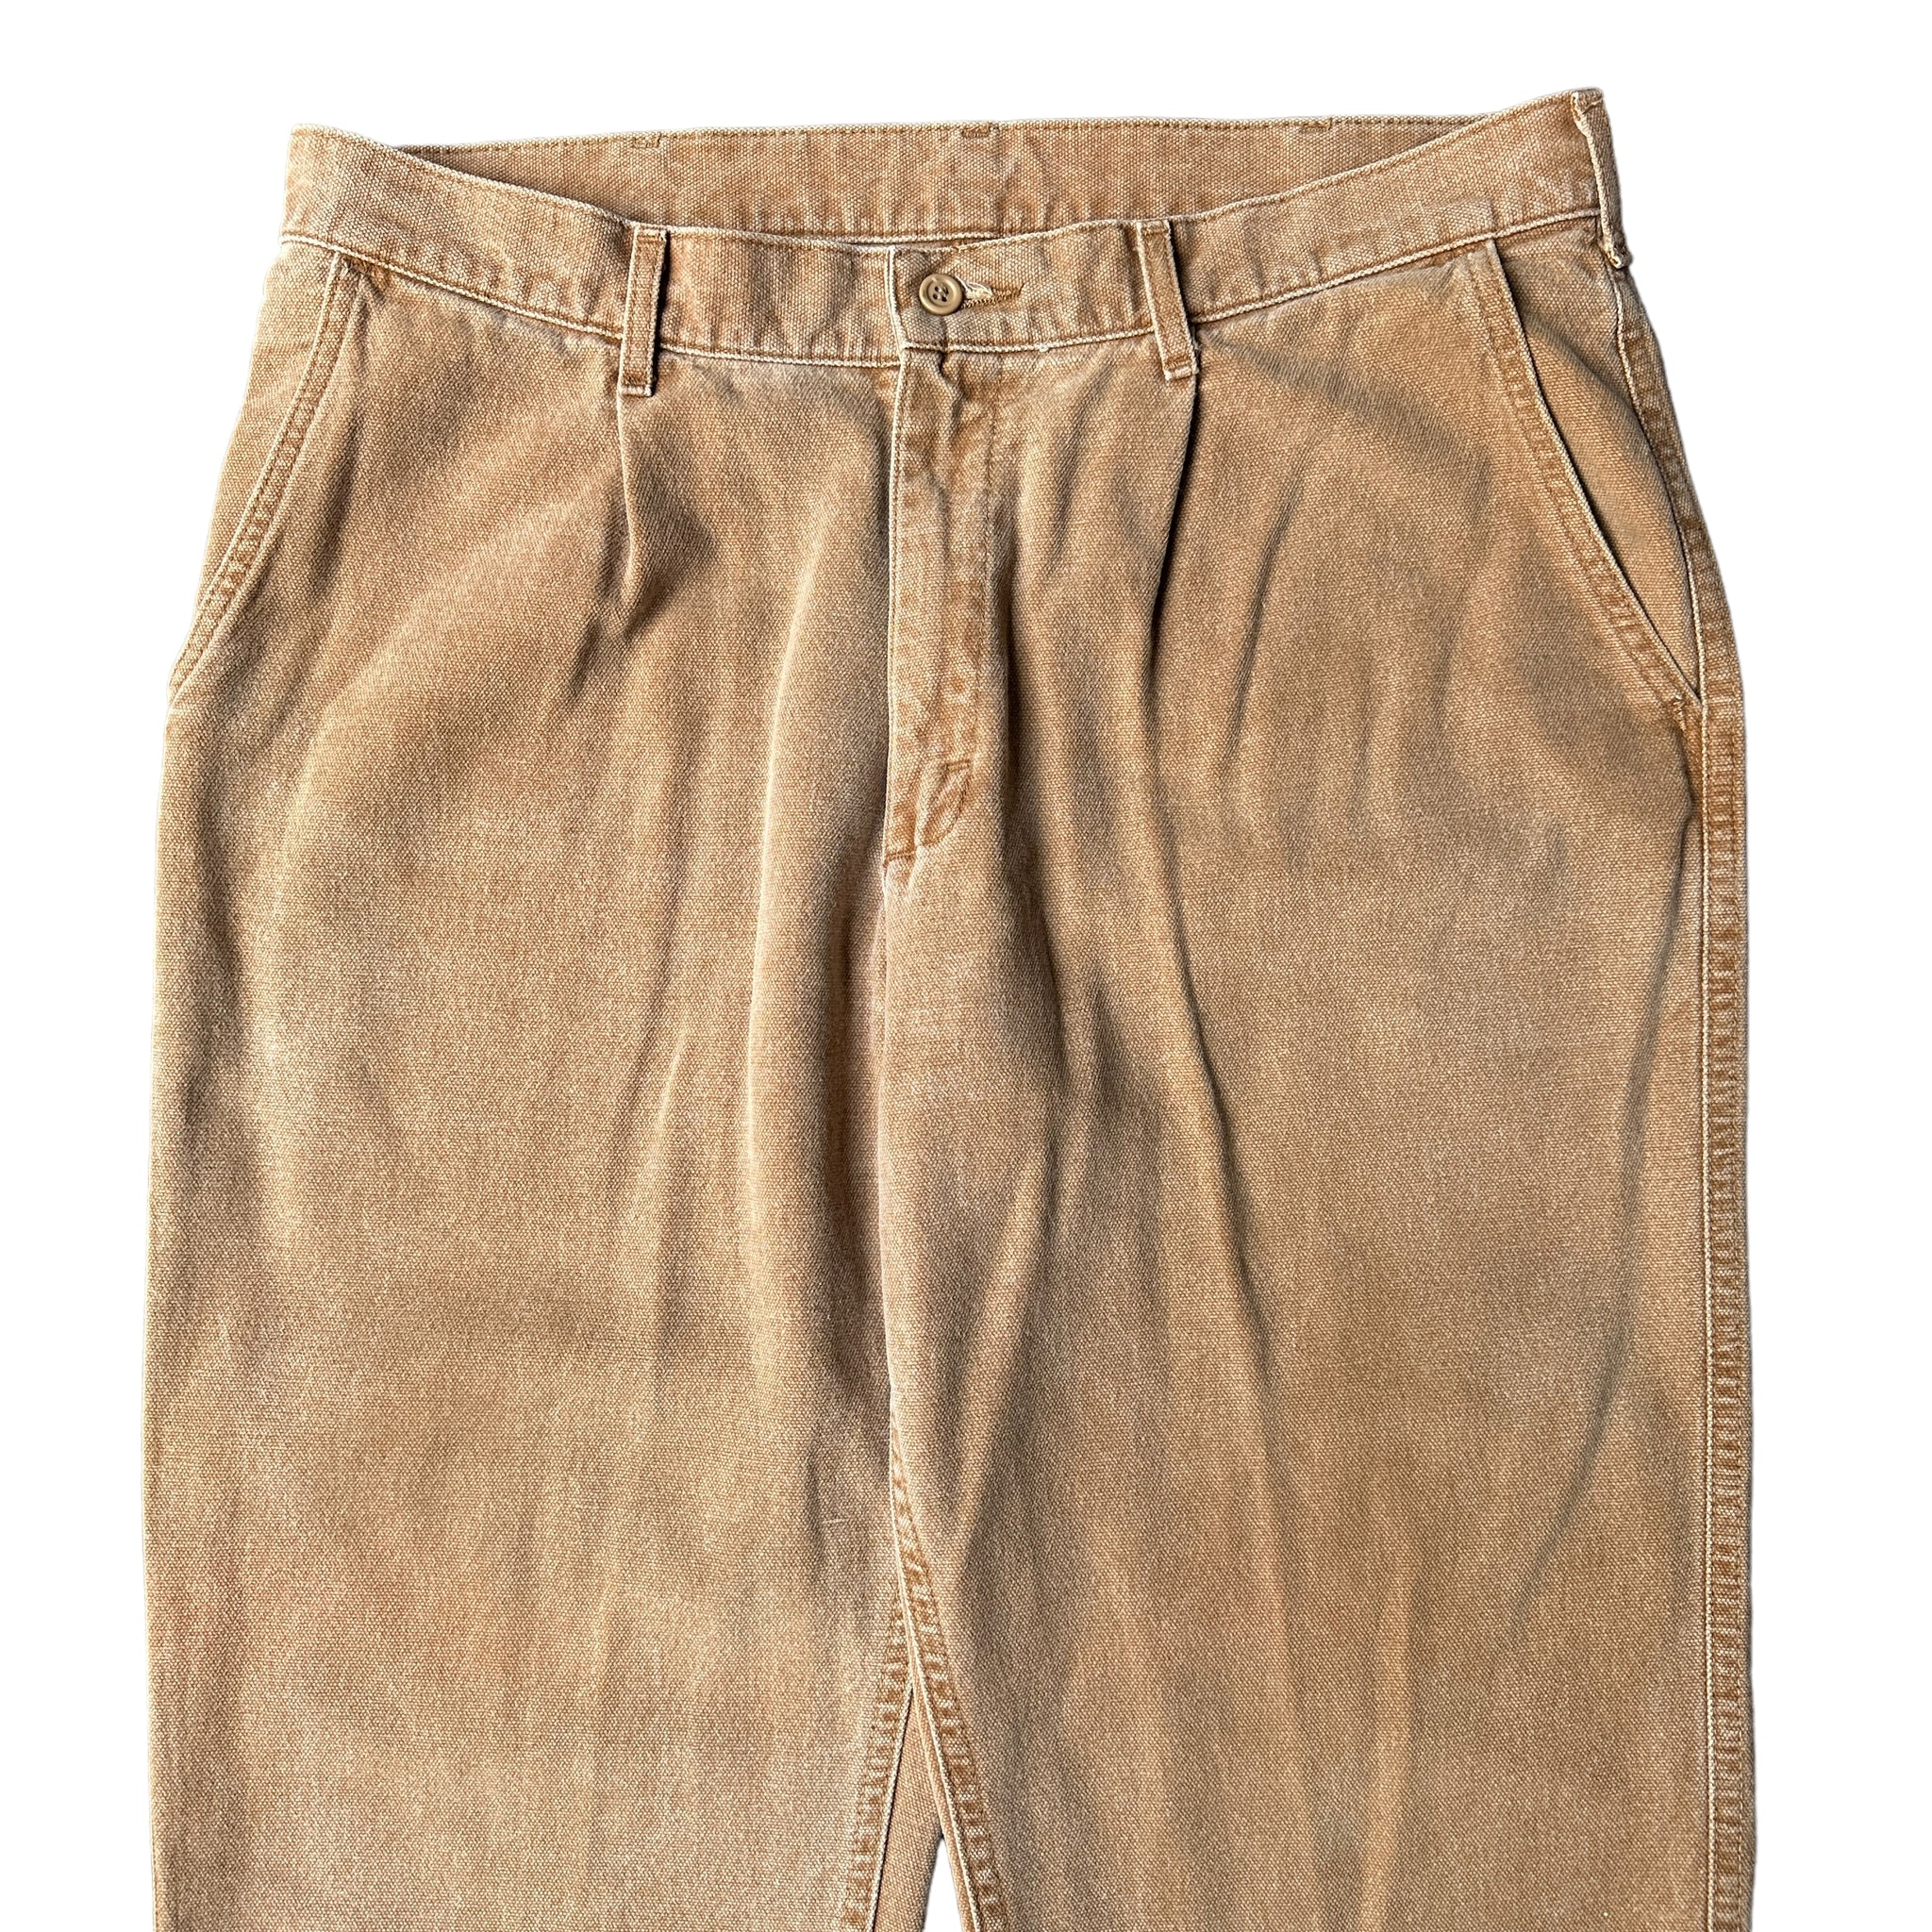 90s LL Bean cotton pants 33/30